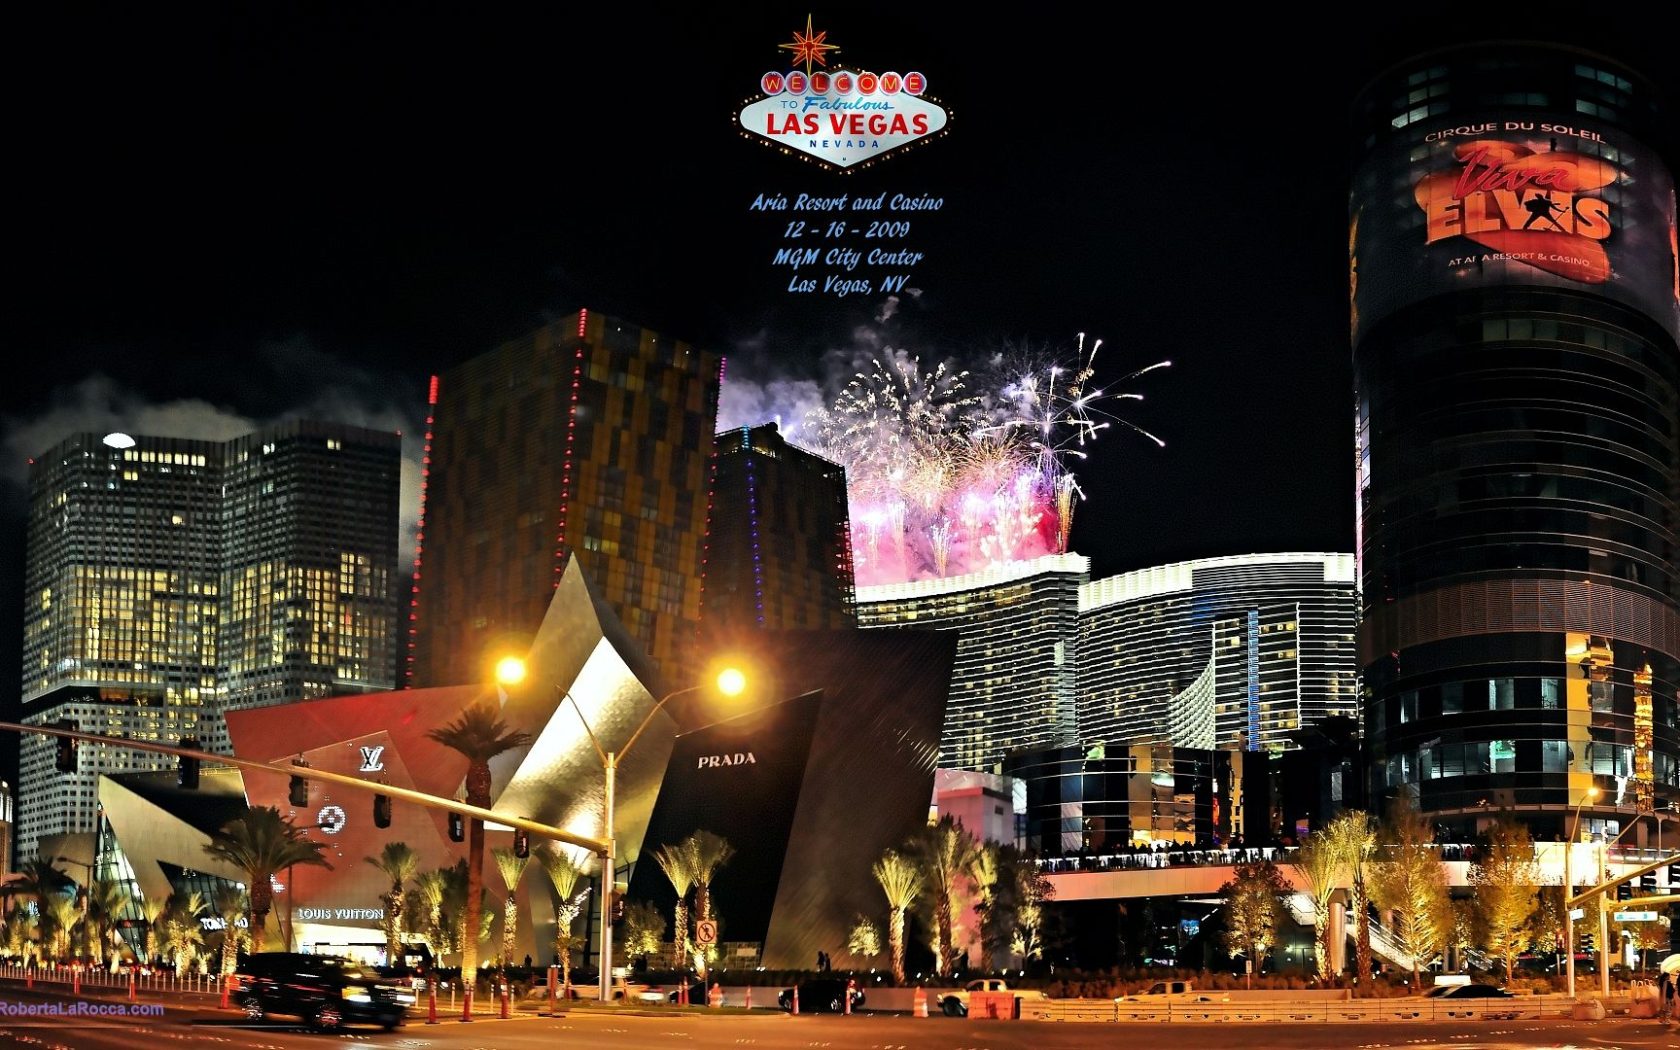 Las vegas opening of aria hotel and casino fireworks downtown desktop wallpaper widescreen x